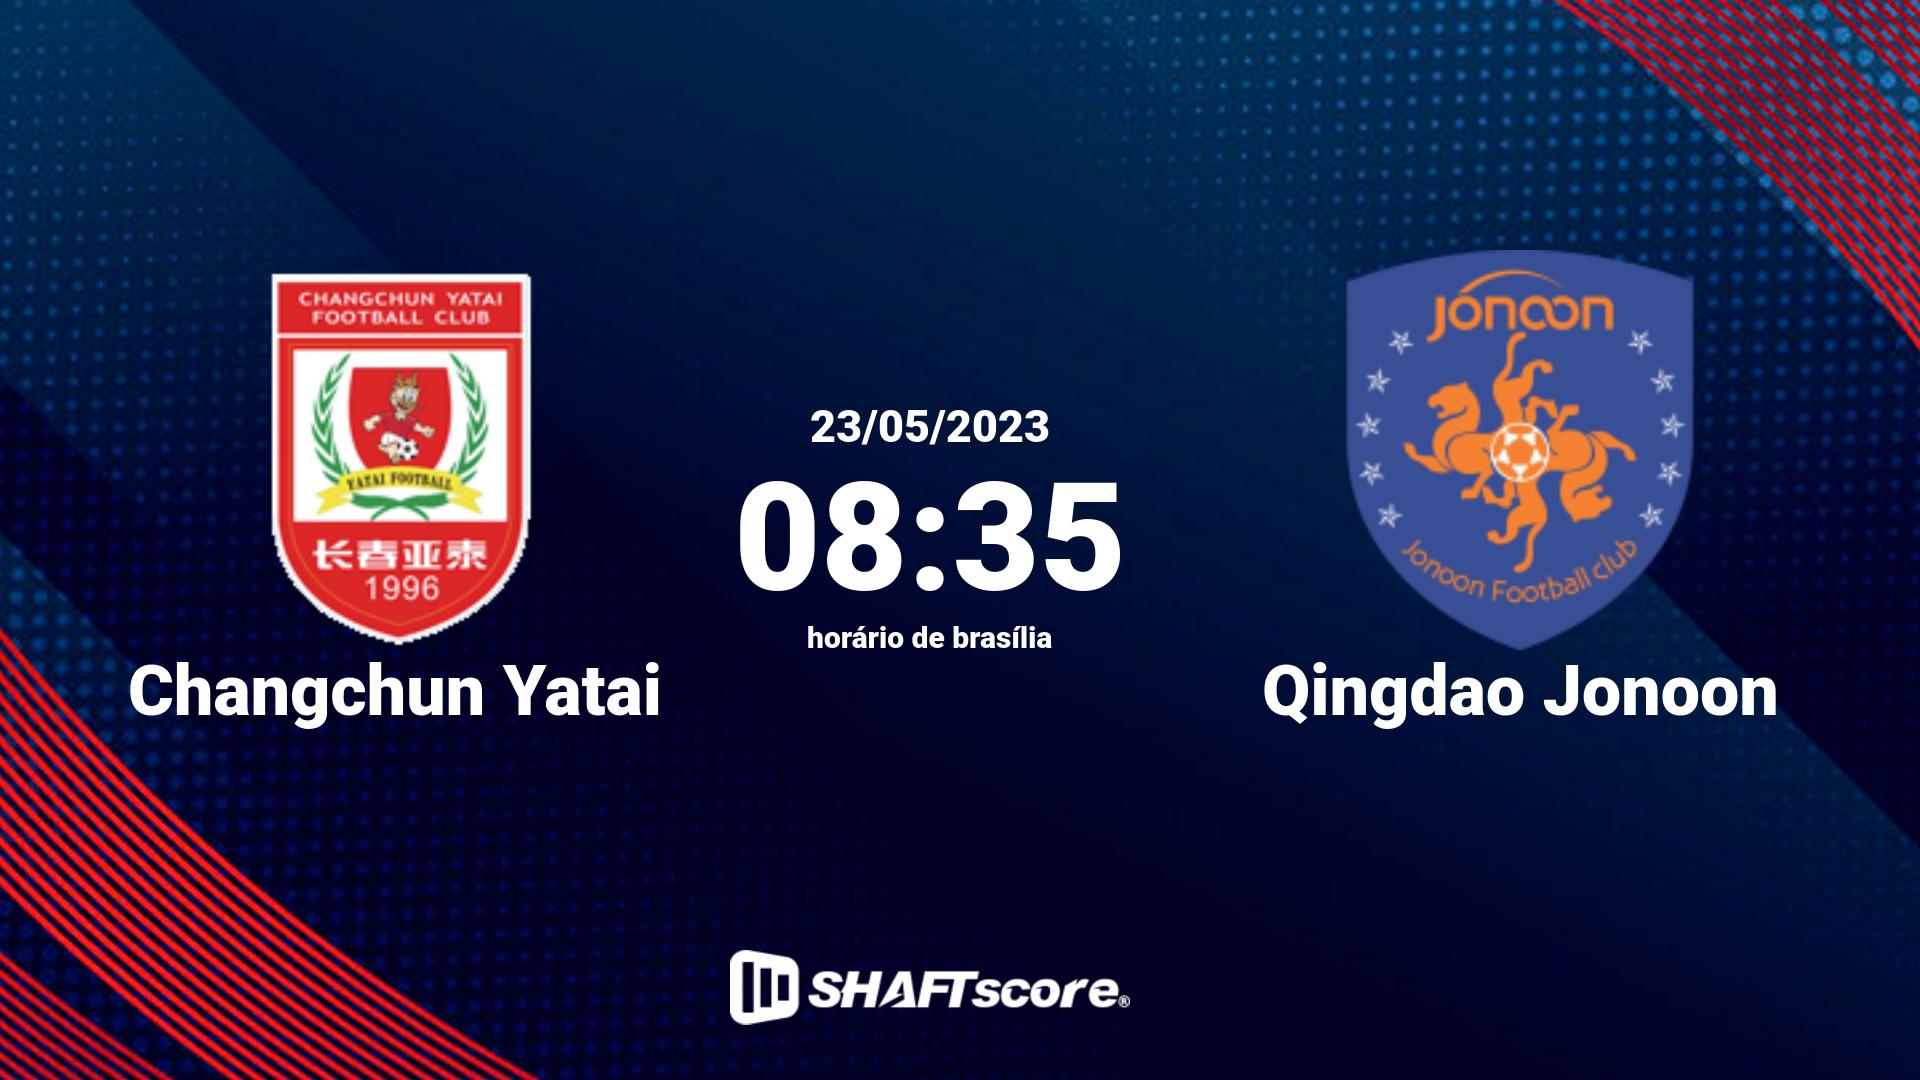 Estatísticas do jogo Changchun Yatai vs Qingdao Jonoon 23.05 08:35